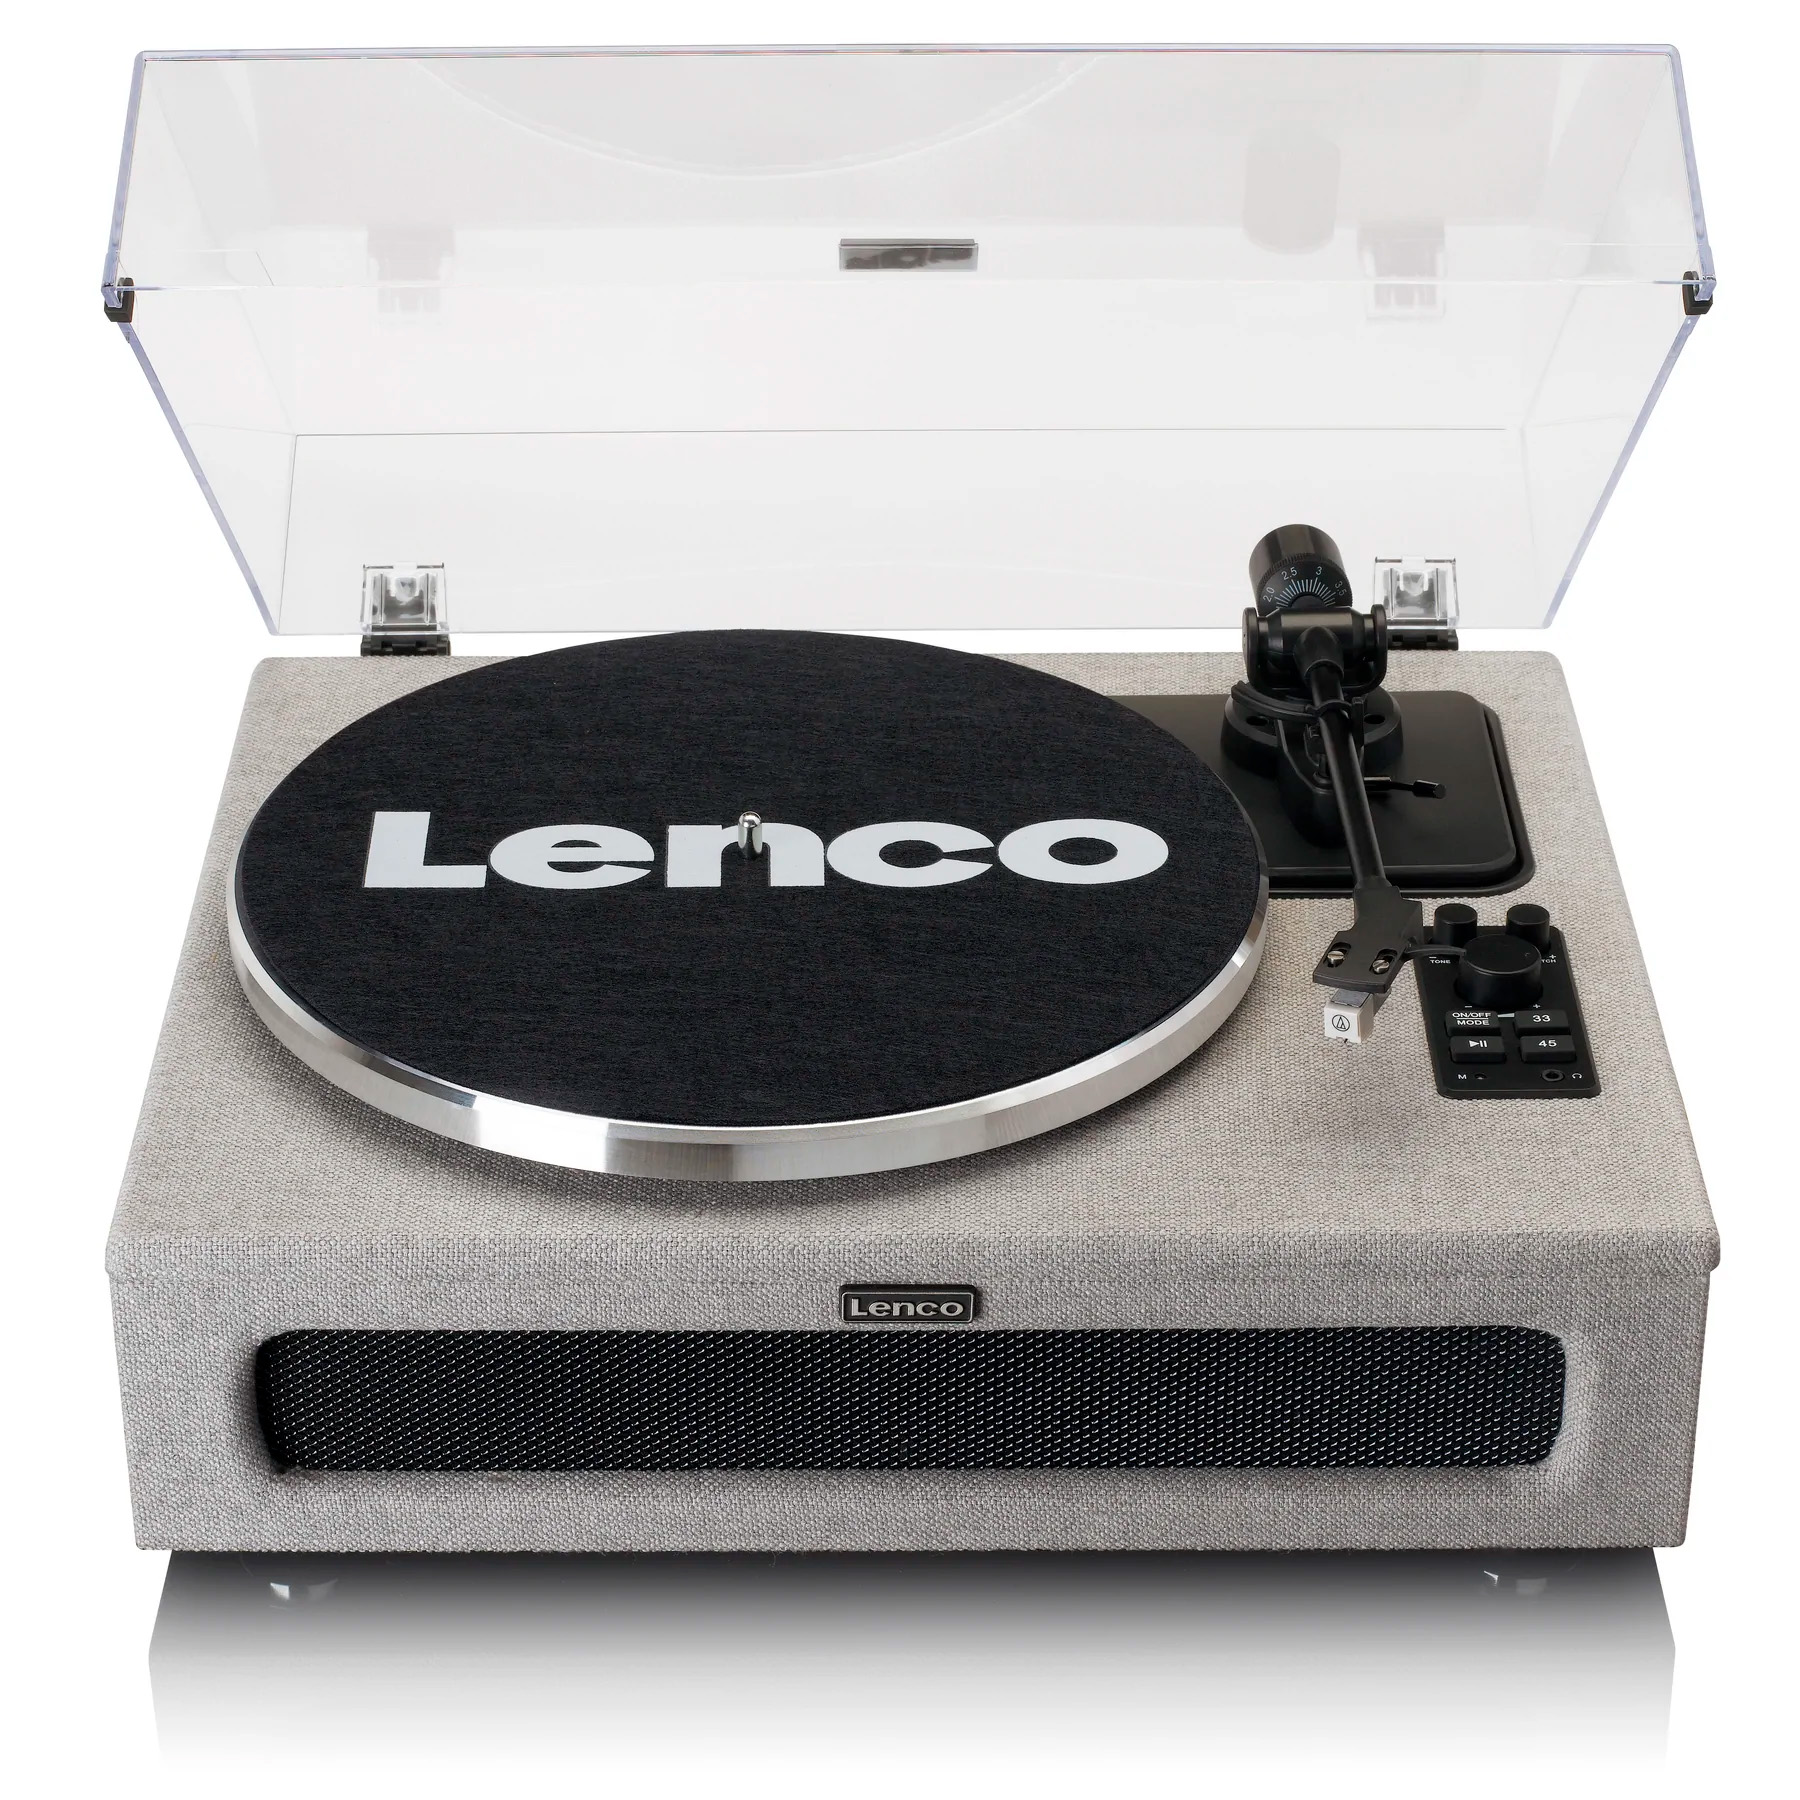 LENCO LS-440GY - eingebaute 4 Grau Plattenspieler Lautsprecher 